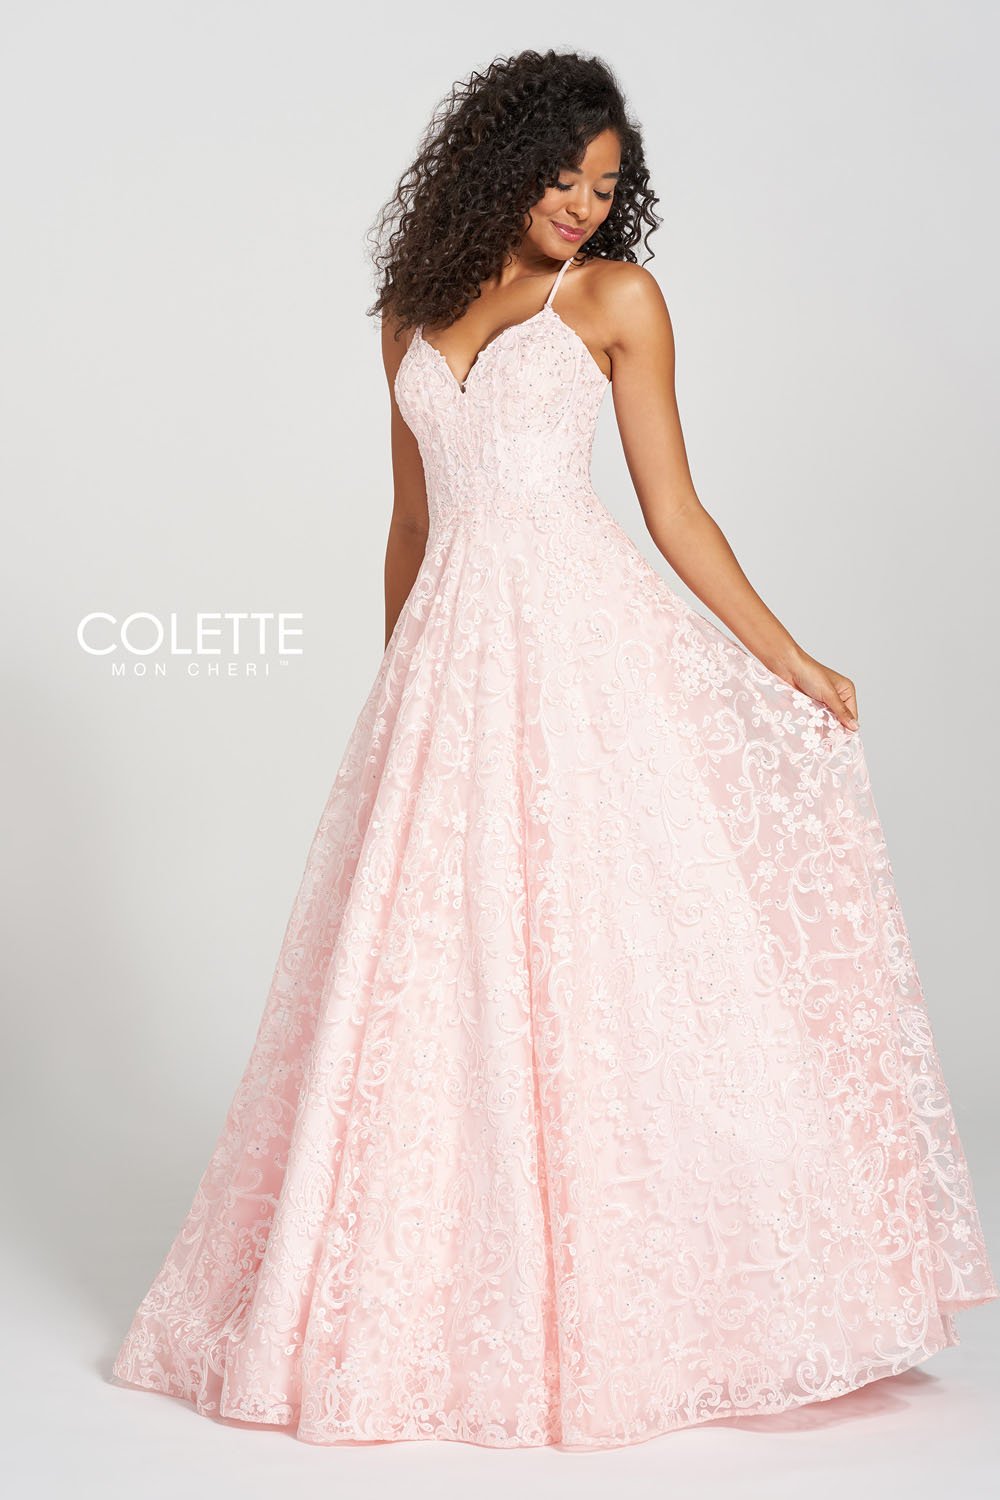 Colette CL12204 Blush prom dresses.  Blush prom dresses image by Colette.